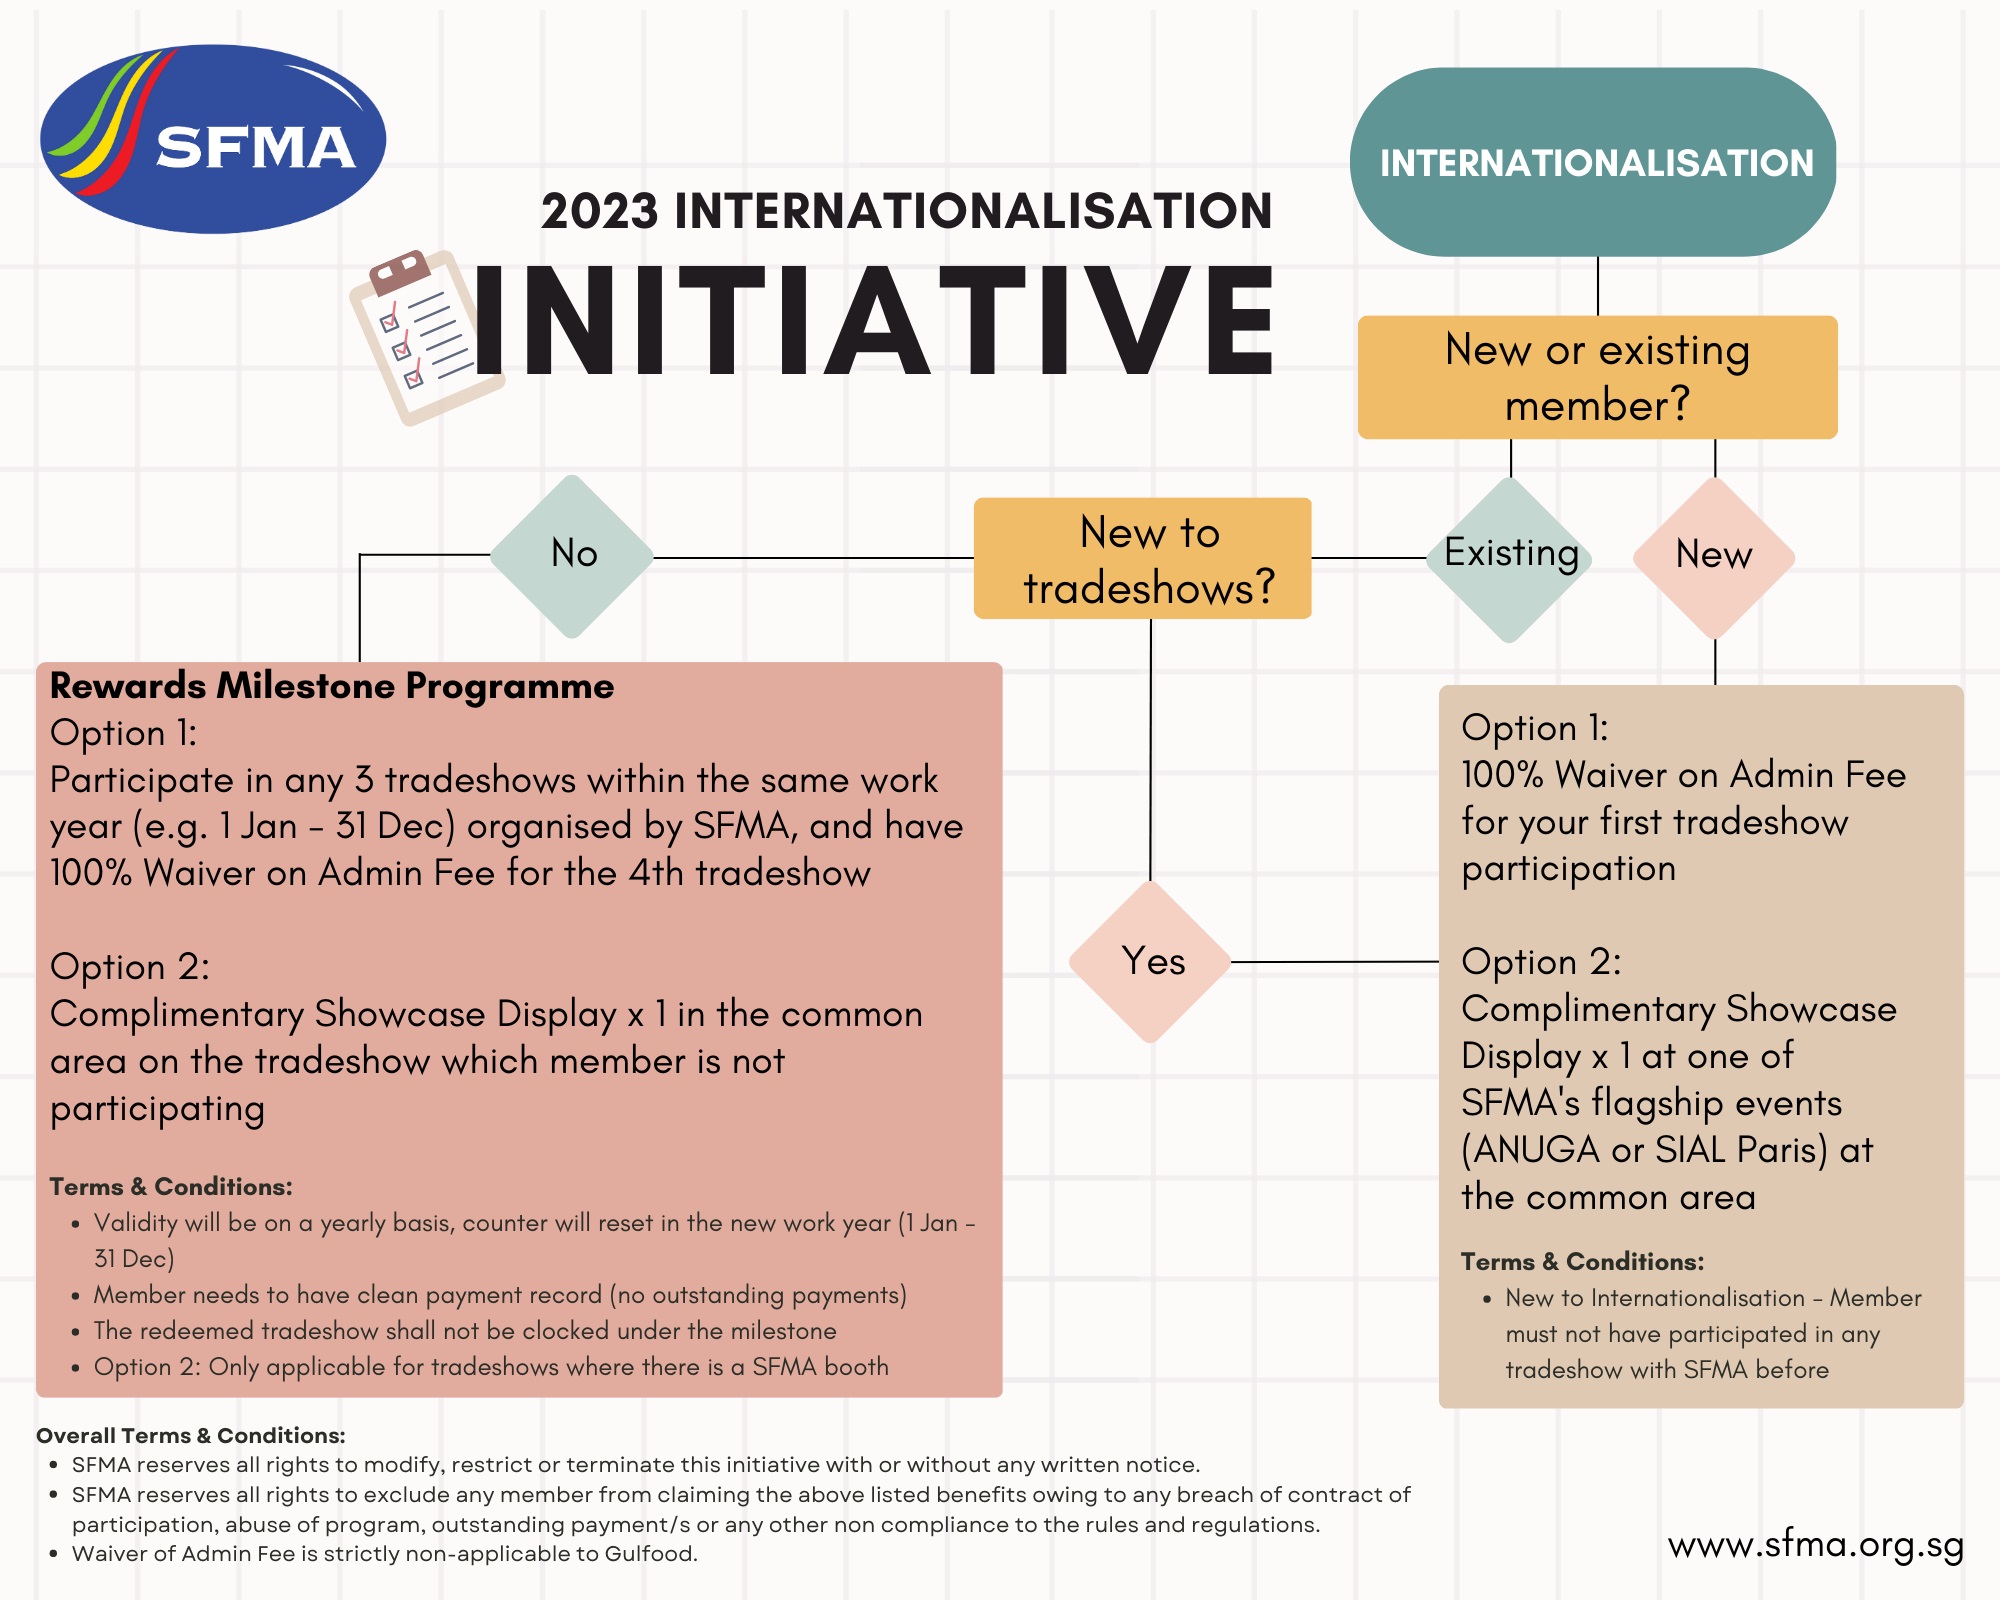 SFMA 2023 Internationalisation Initiative